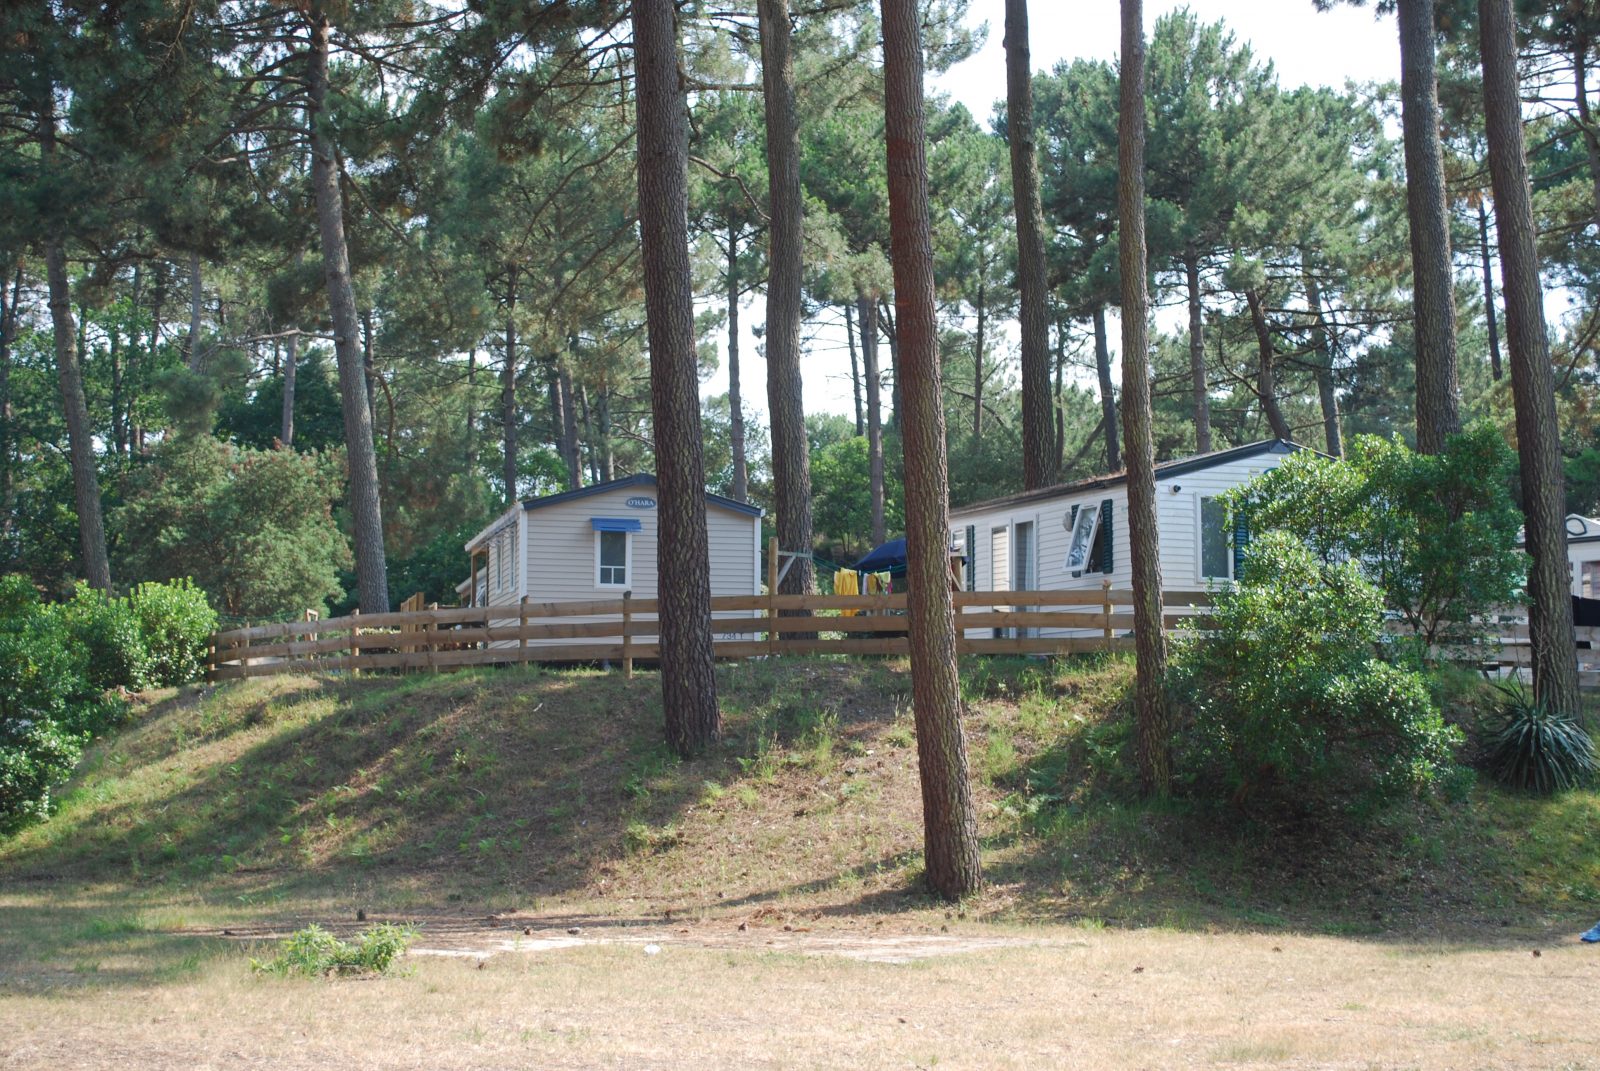 Campingplatz Maubuisson Carcans Maubuisson